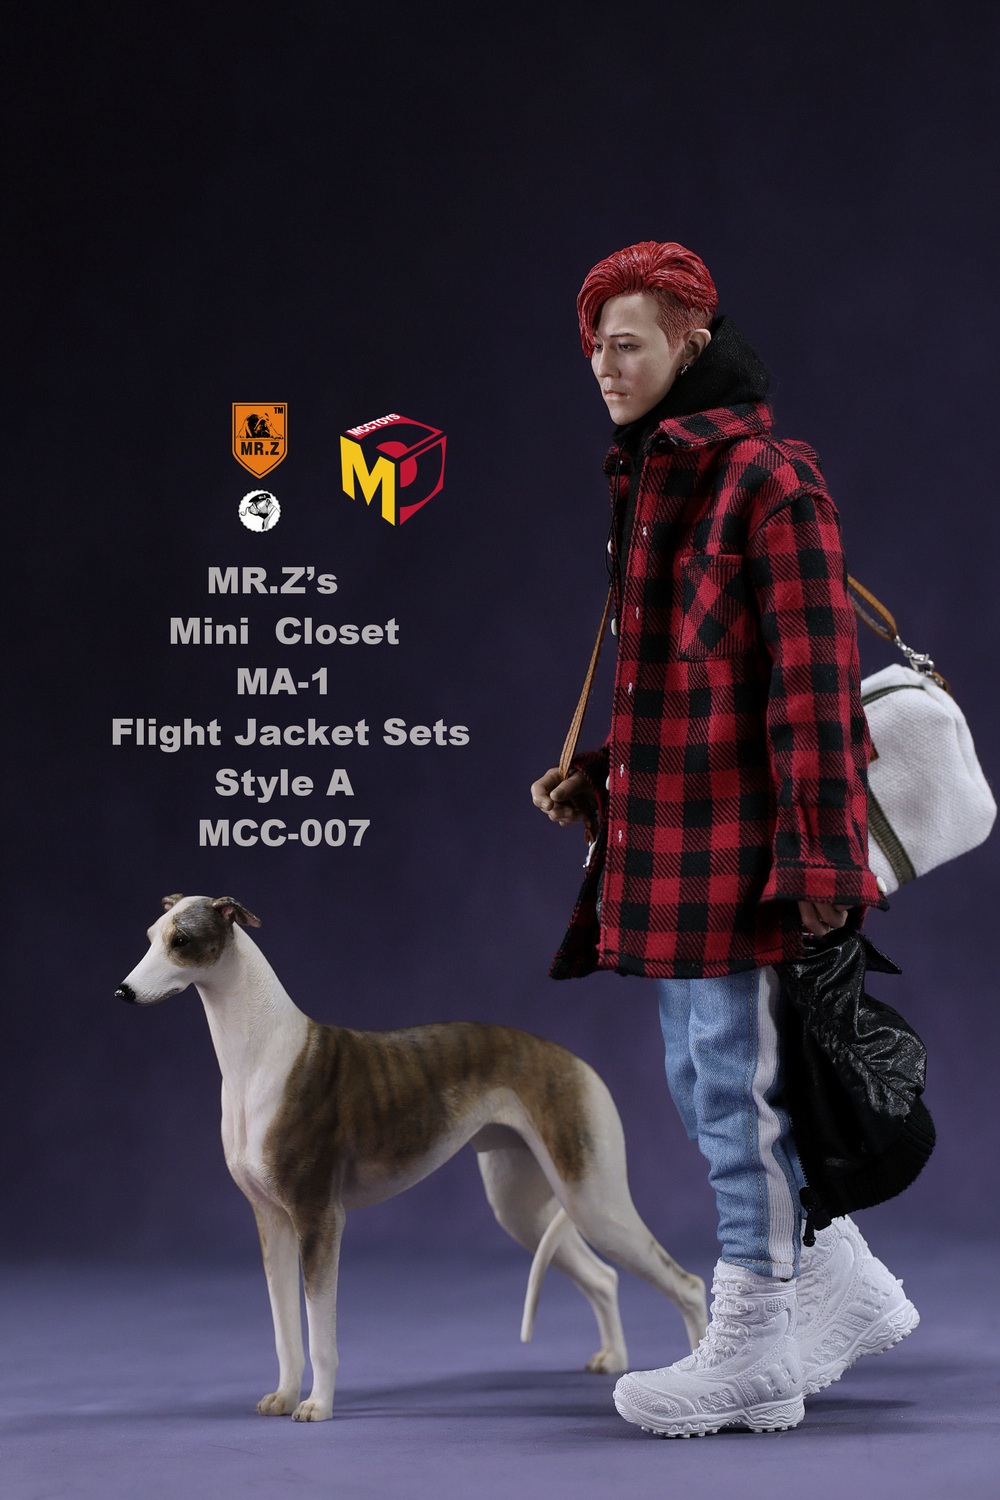 Clothing - NEW PRODUCT: MCCToys x Mr. Z 1/6 MR.Z's Mini Closet - Flight Jacket sets 723